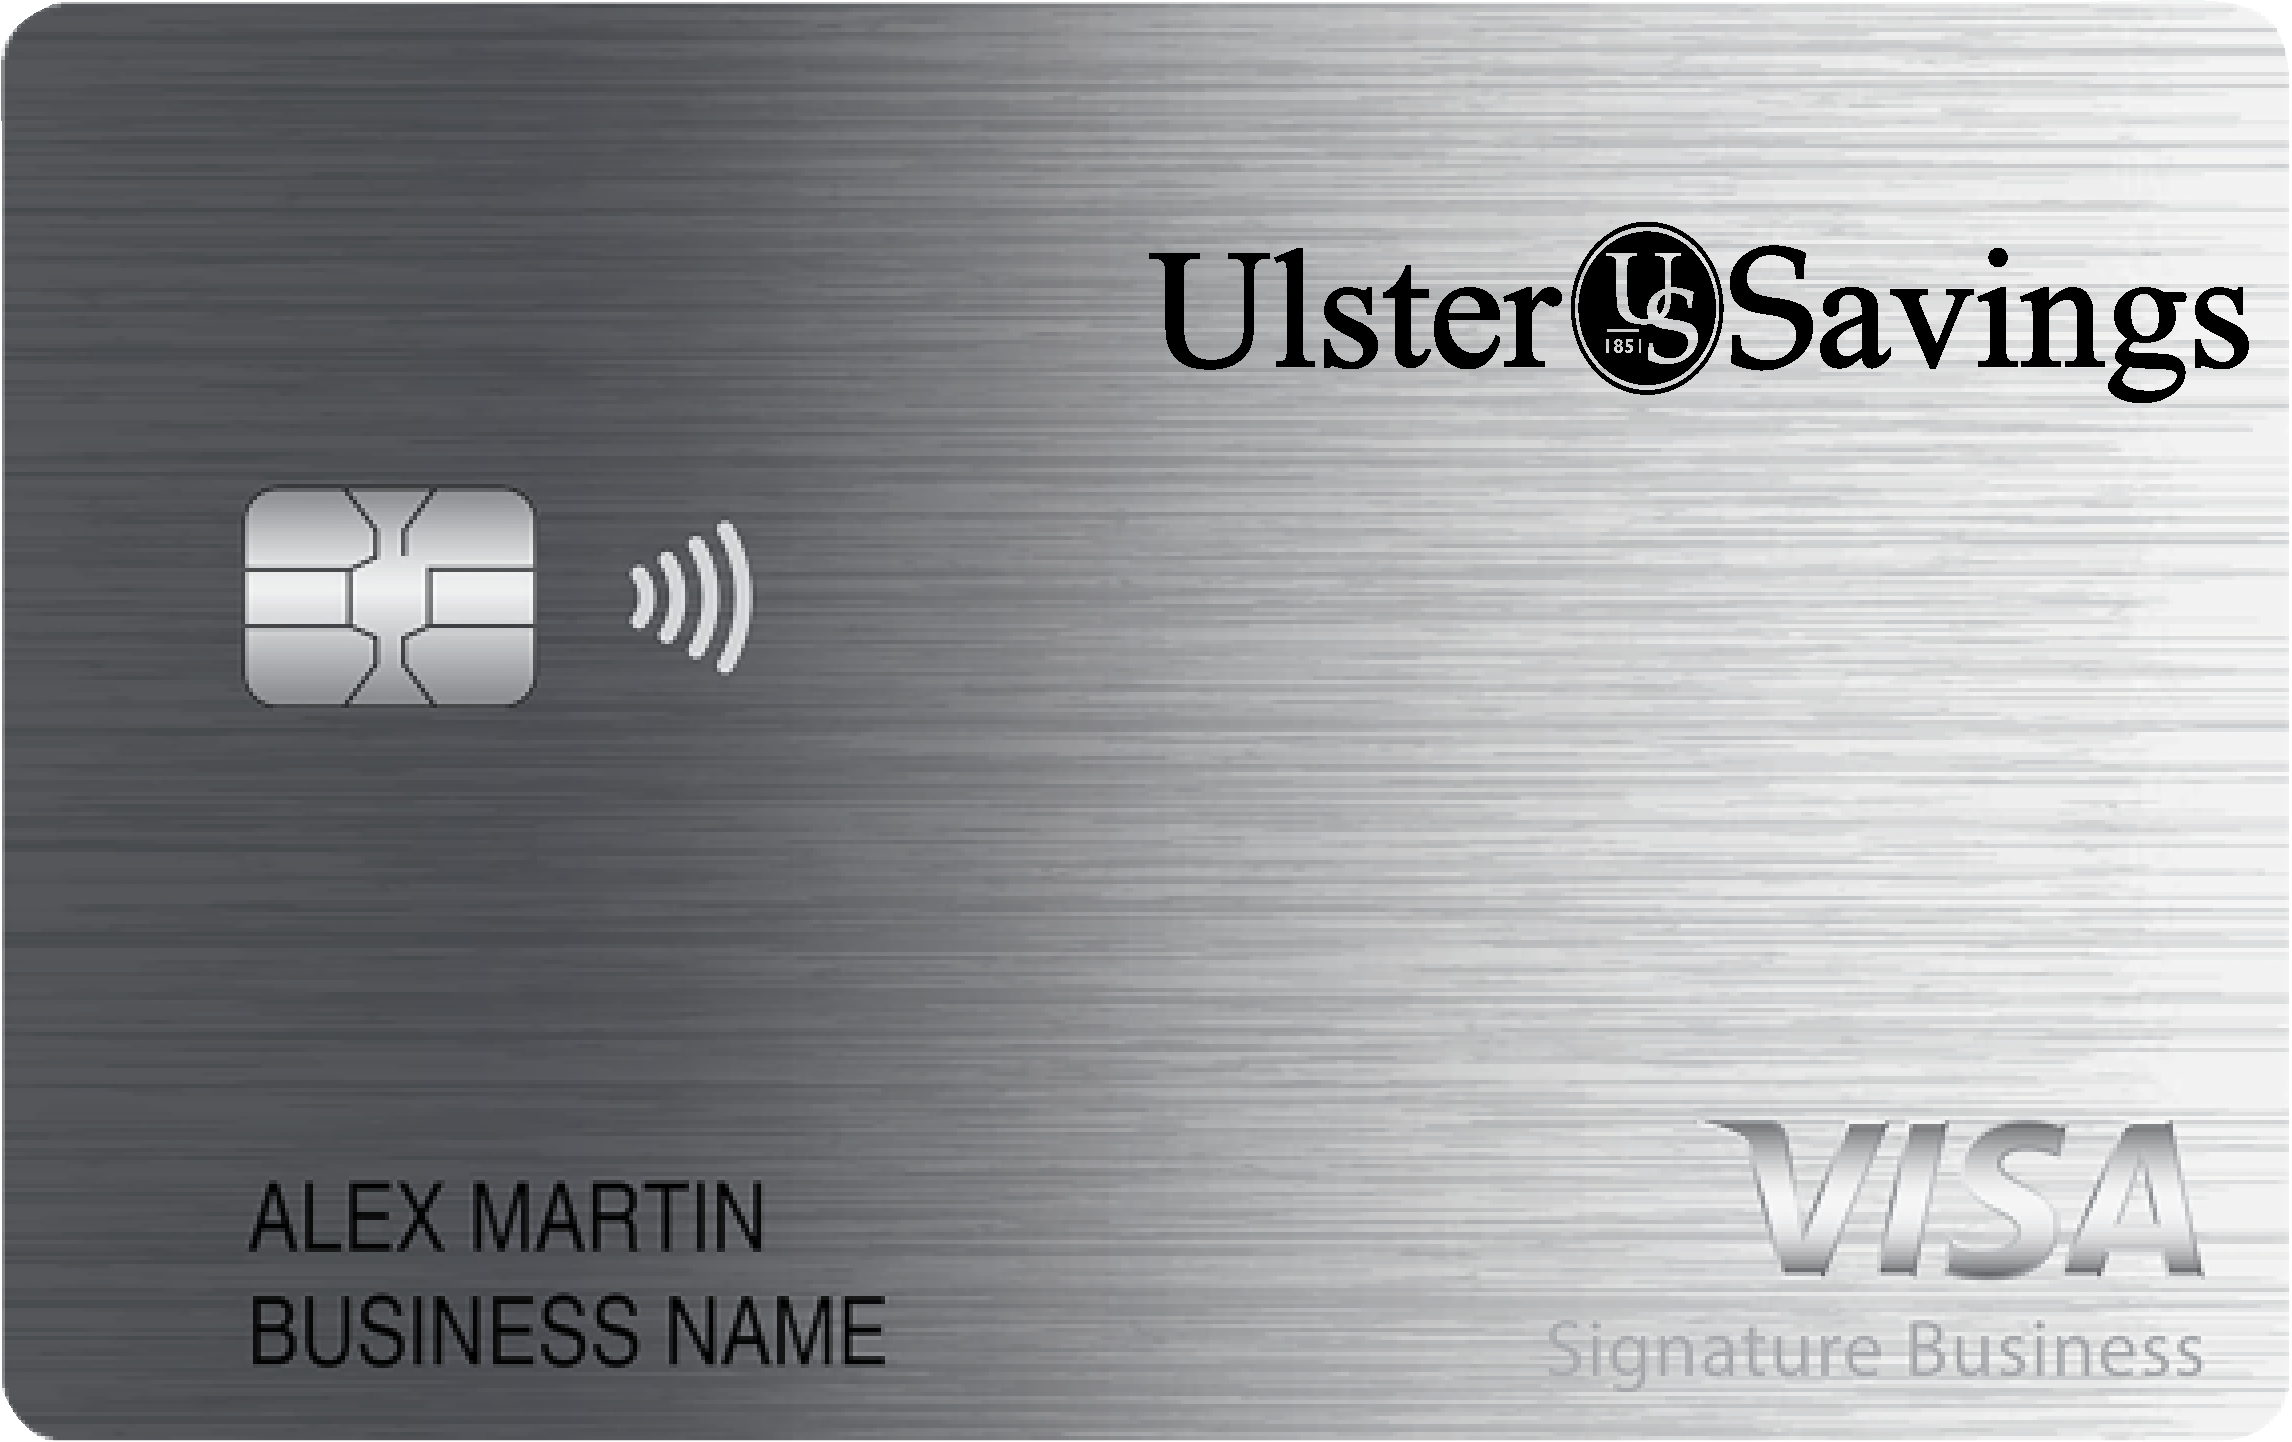 Ulster Savings Bank Smart Business Rewards Card